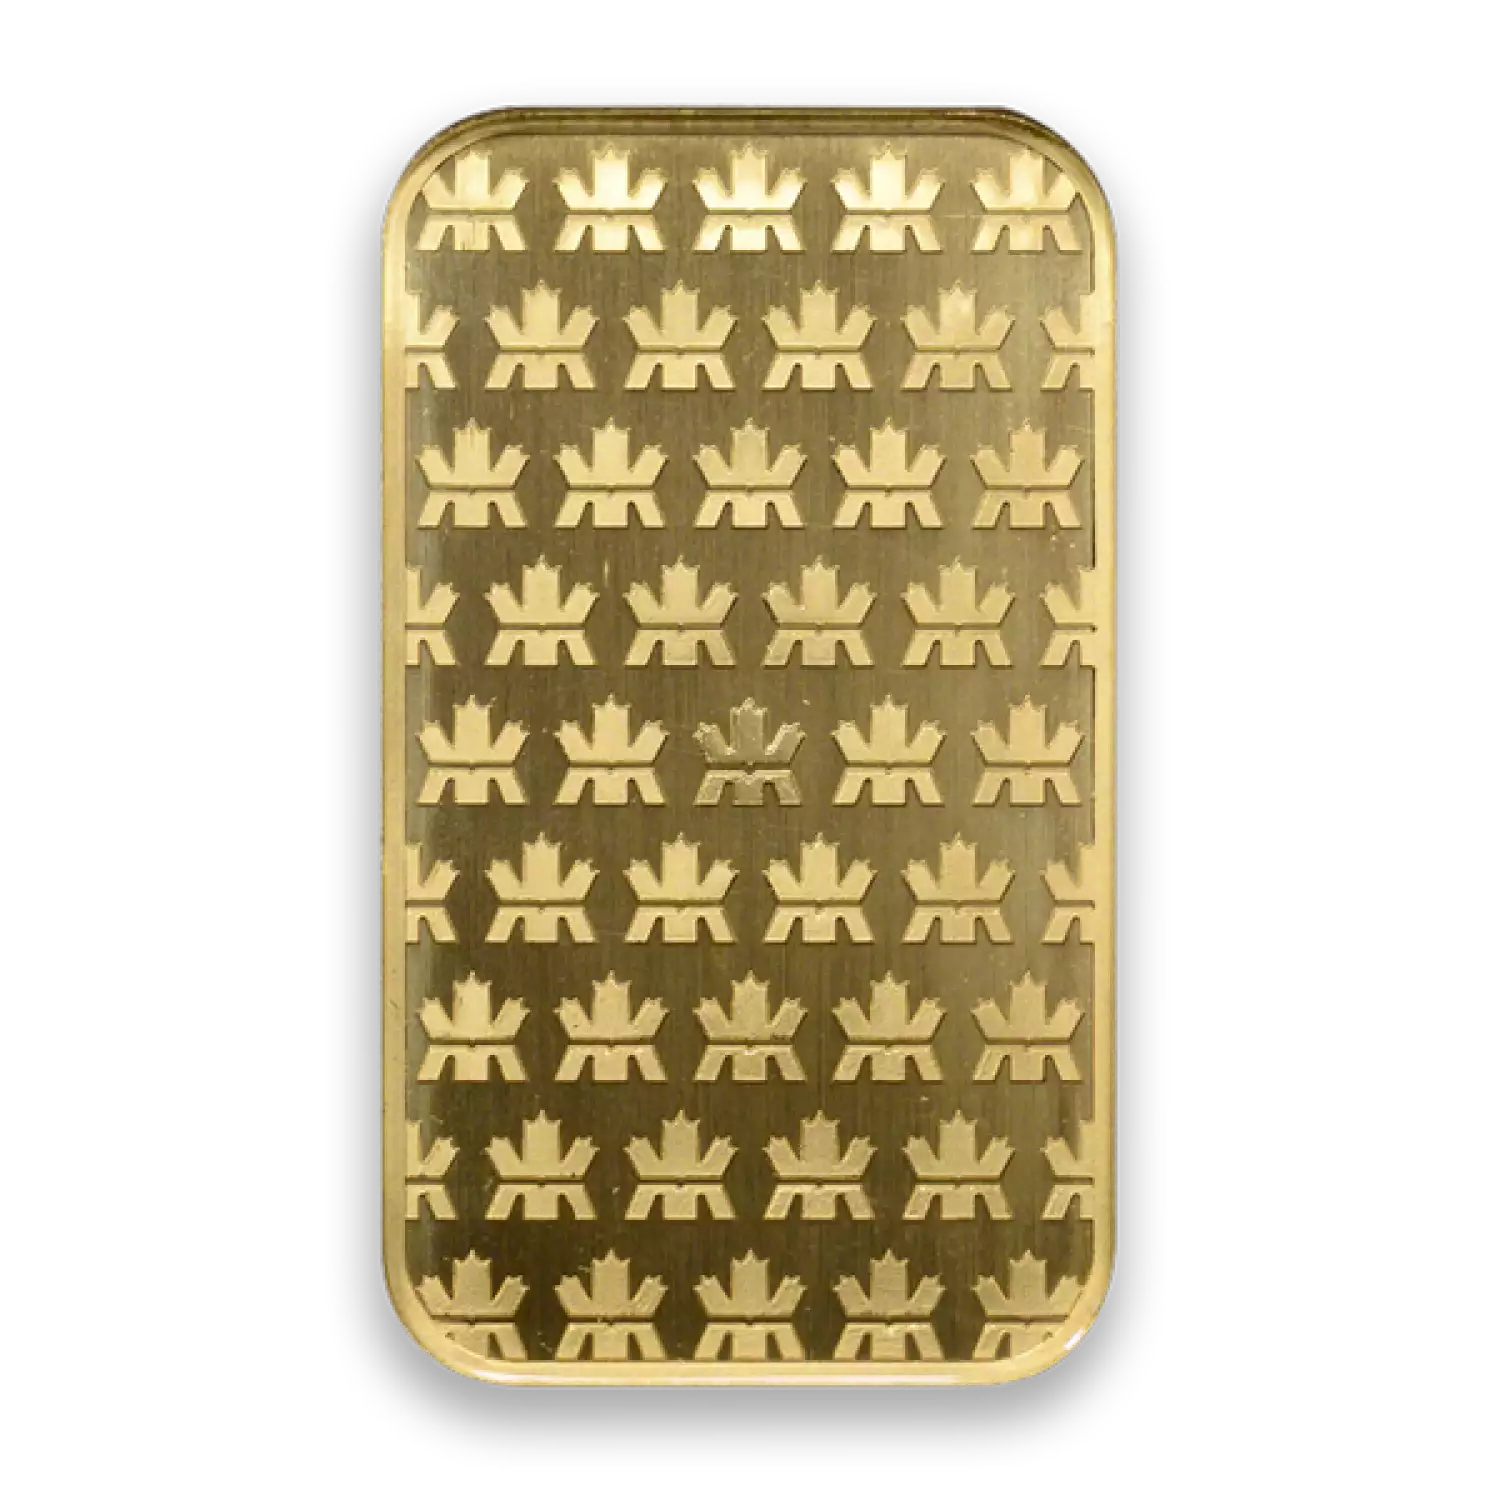 1oz Royal Canadian Mint Gold Bar (2)